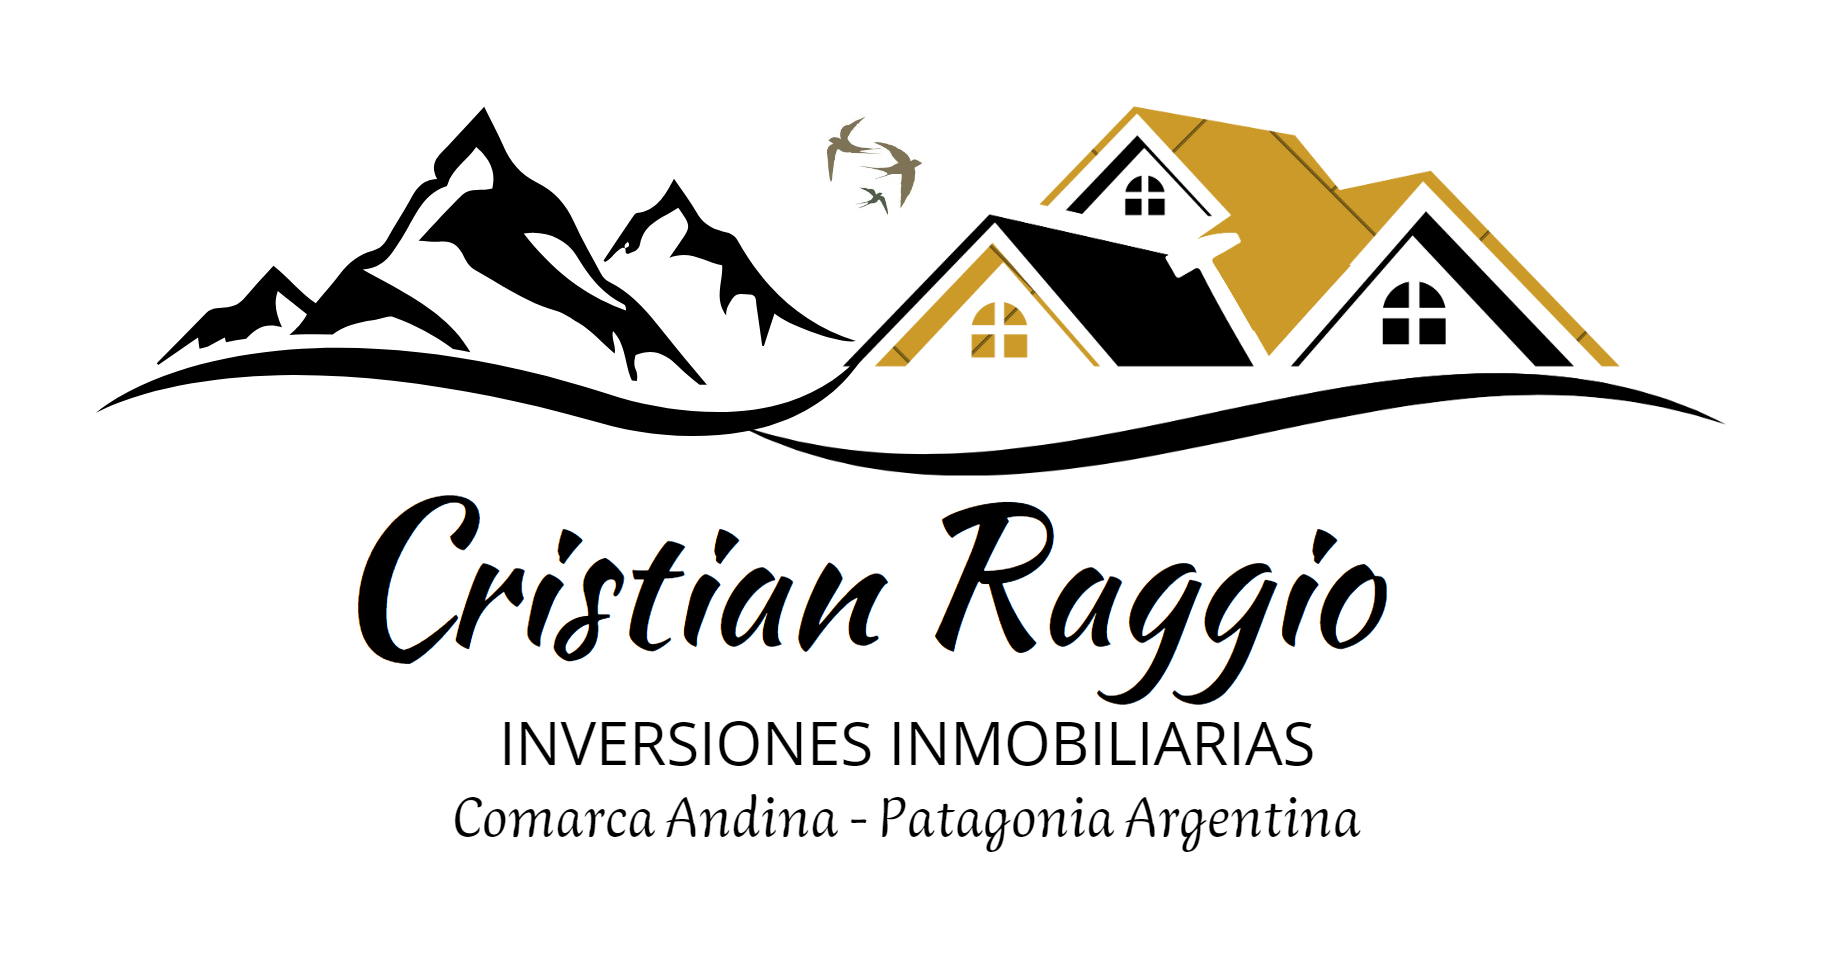 Cristian Raggio Inversiones Inmobiliarias